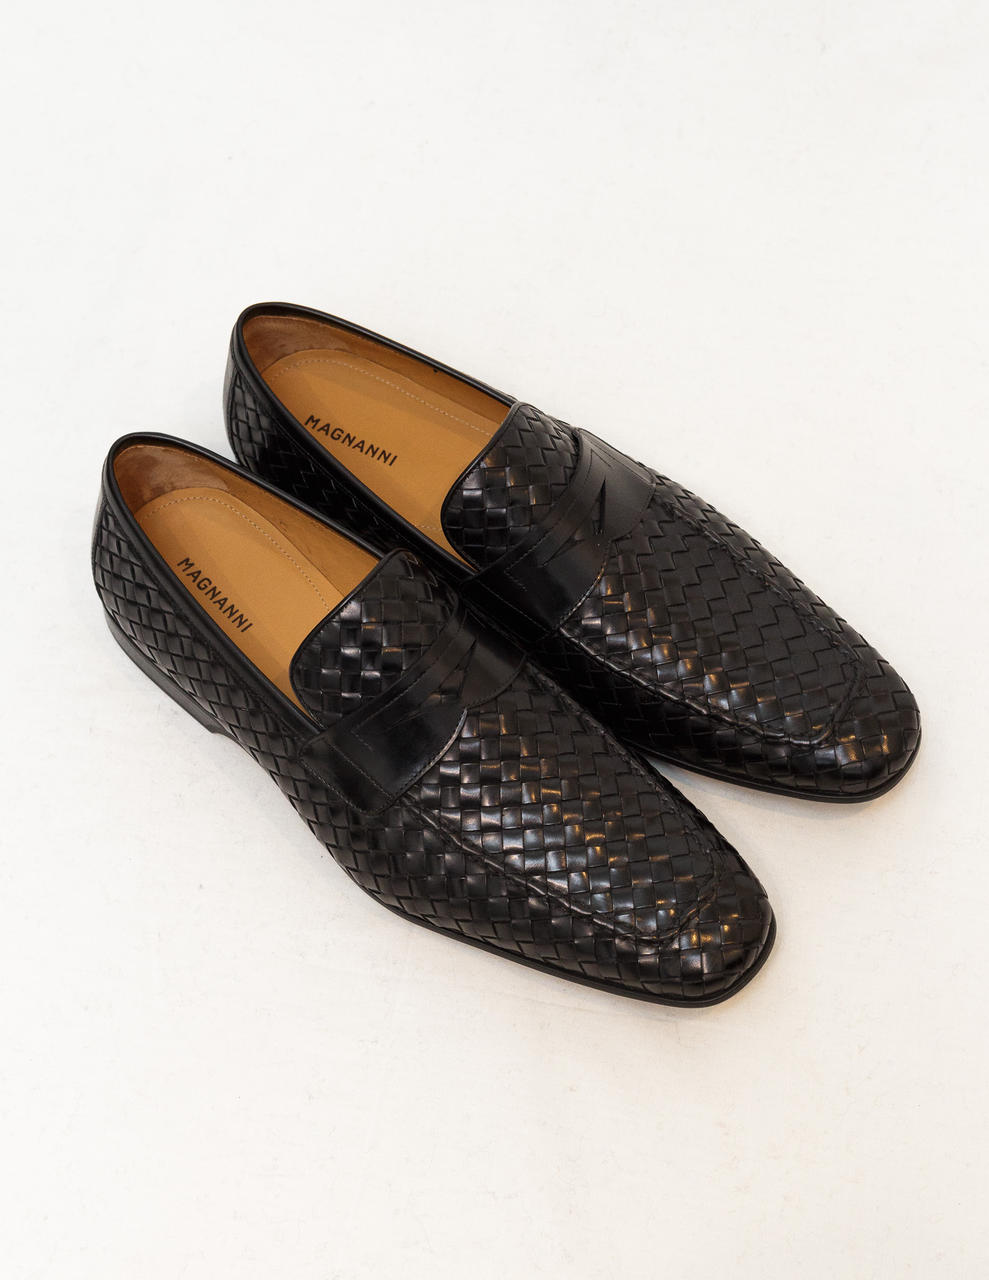 magnanni black loafers